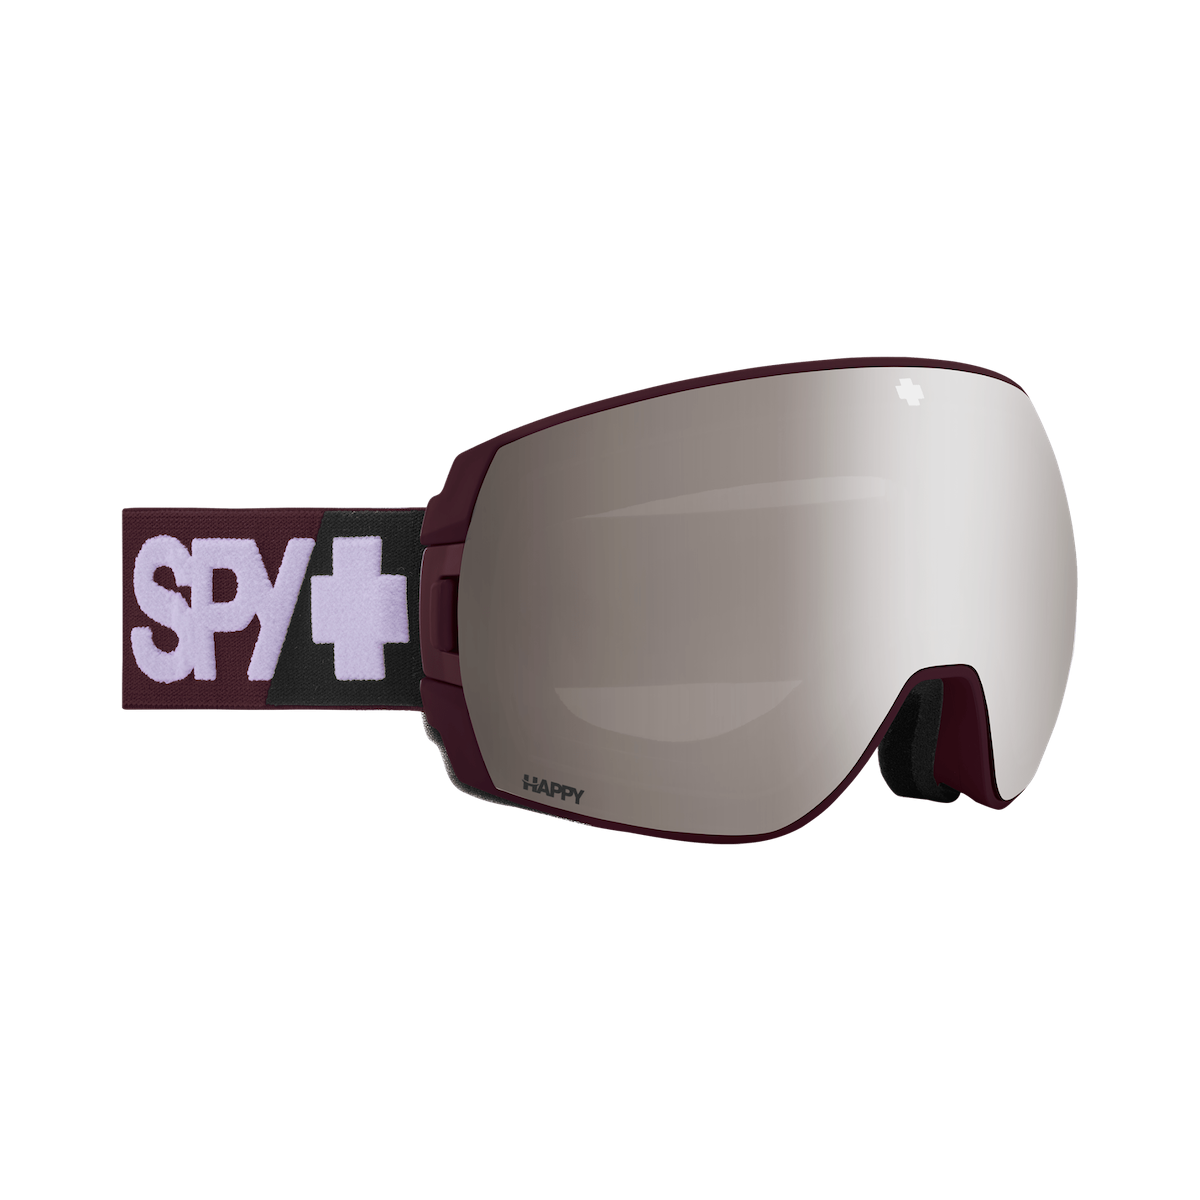 SPY LEGACY SE SNOW goggles - merlot